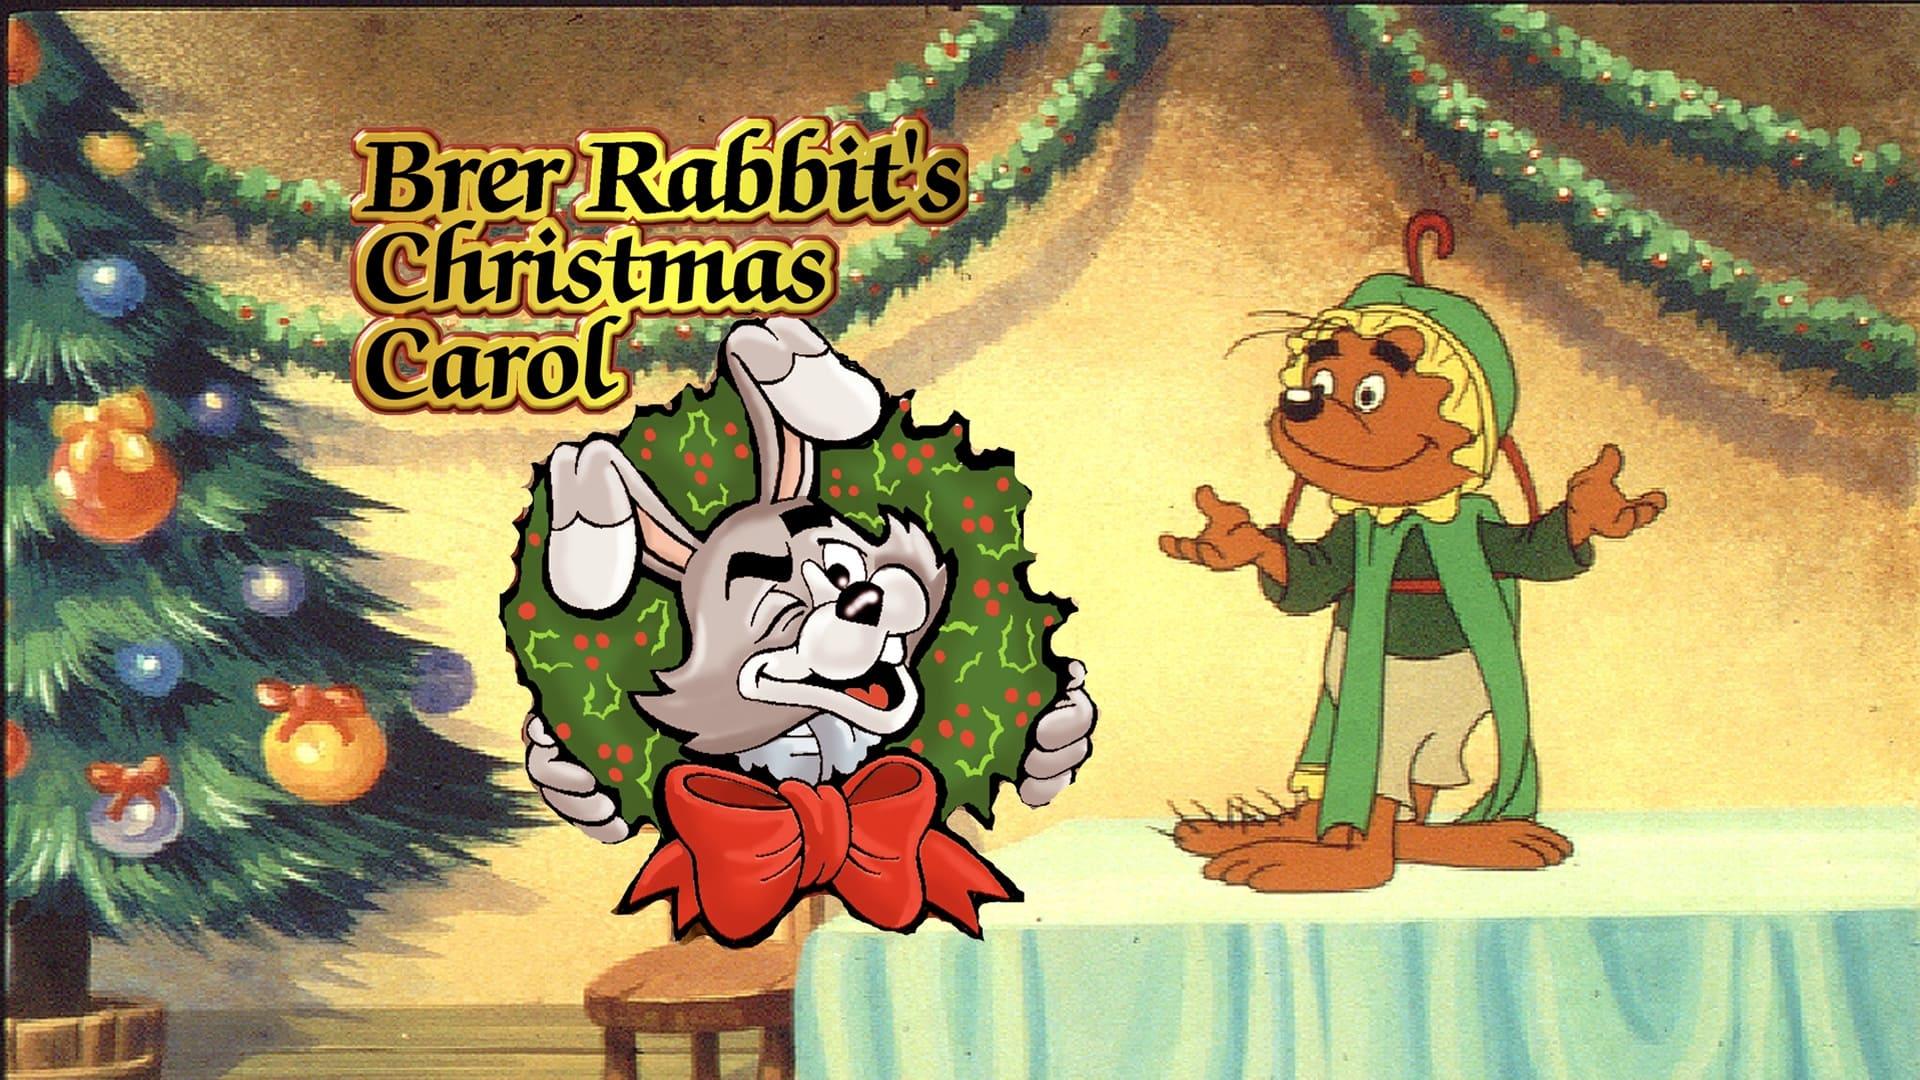 Brer Rabbit's Christmas Carol backdrop